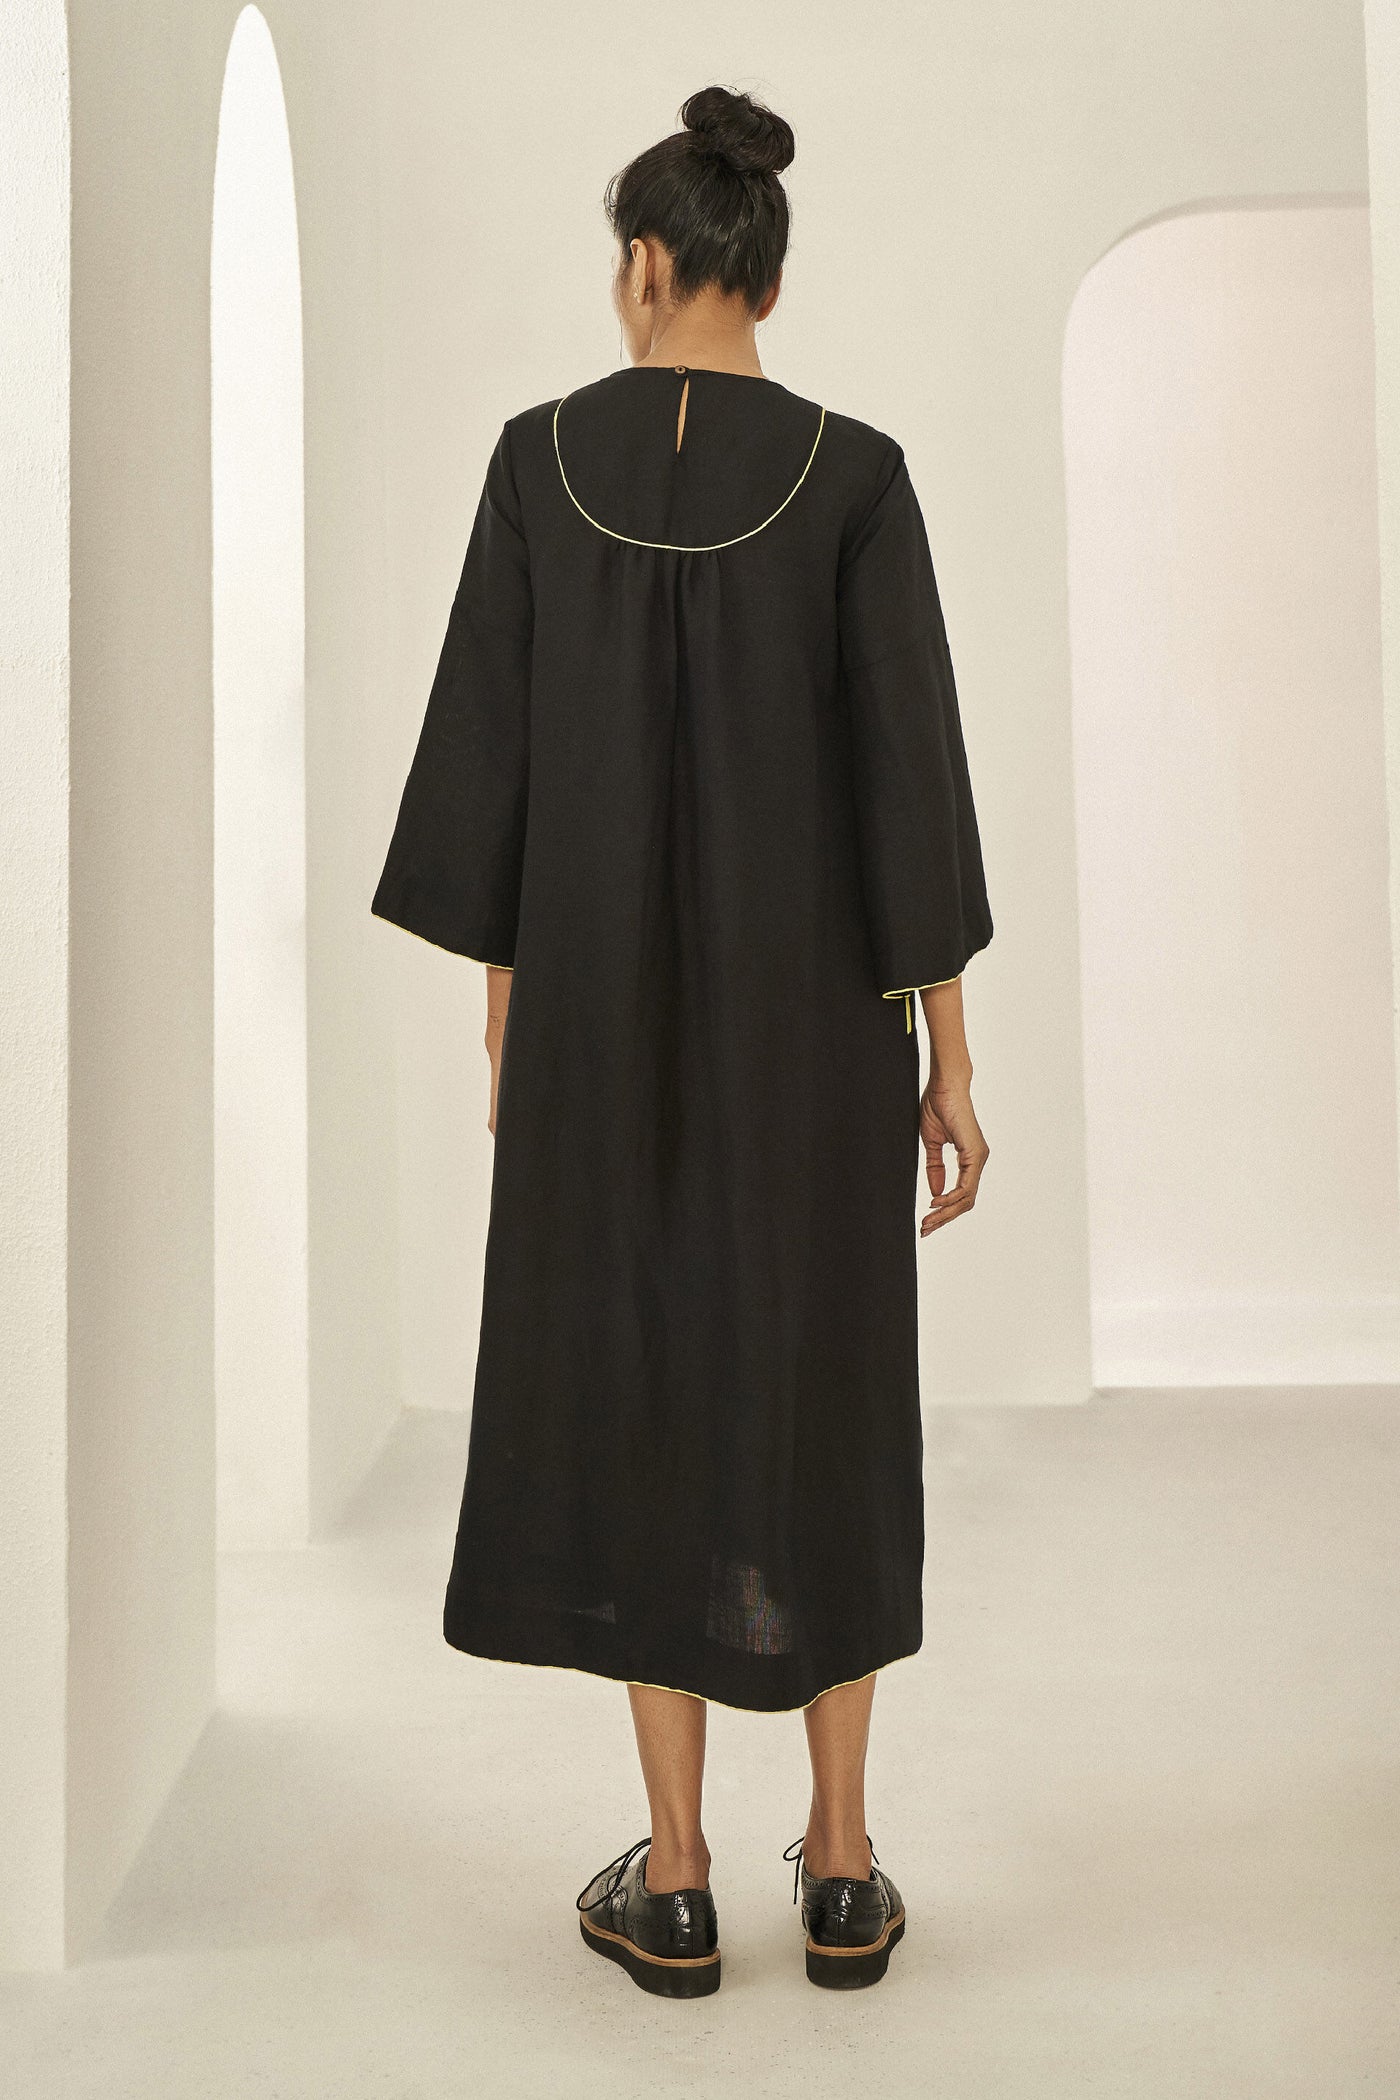 Anita Dongre Soiree A Line Dress Black indian designer wear online shopping melange singapore